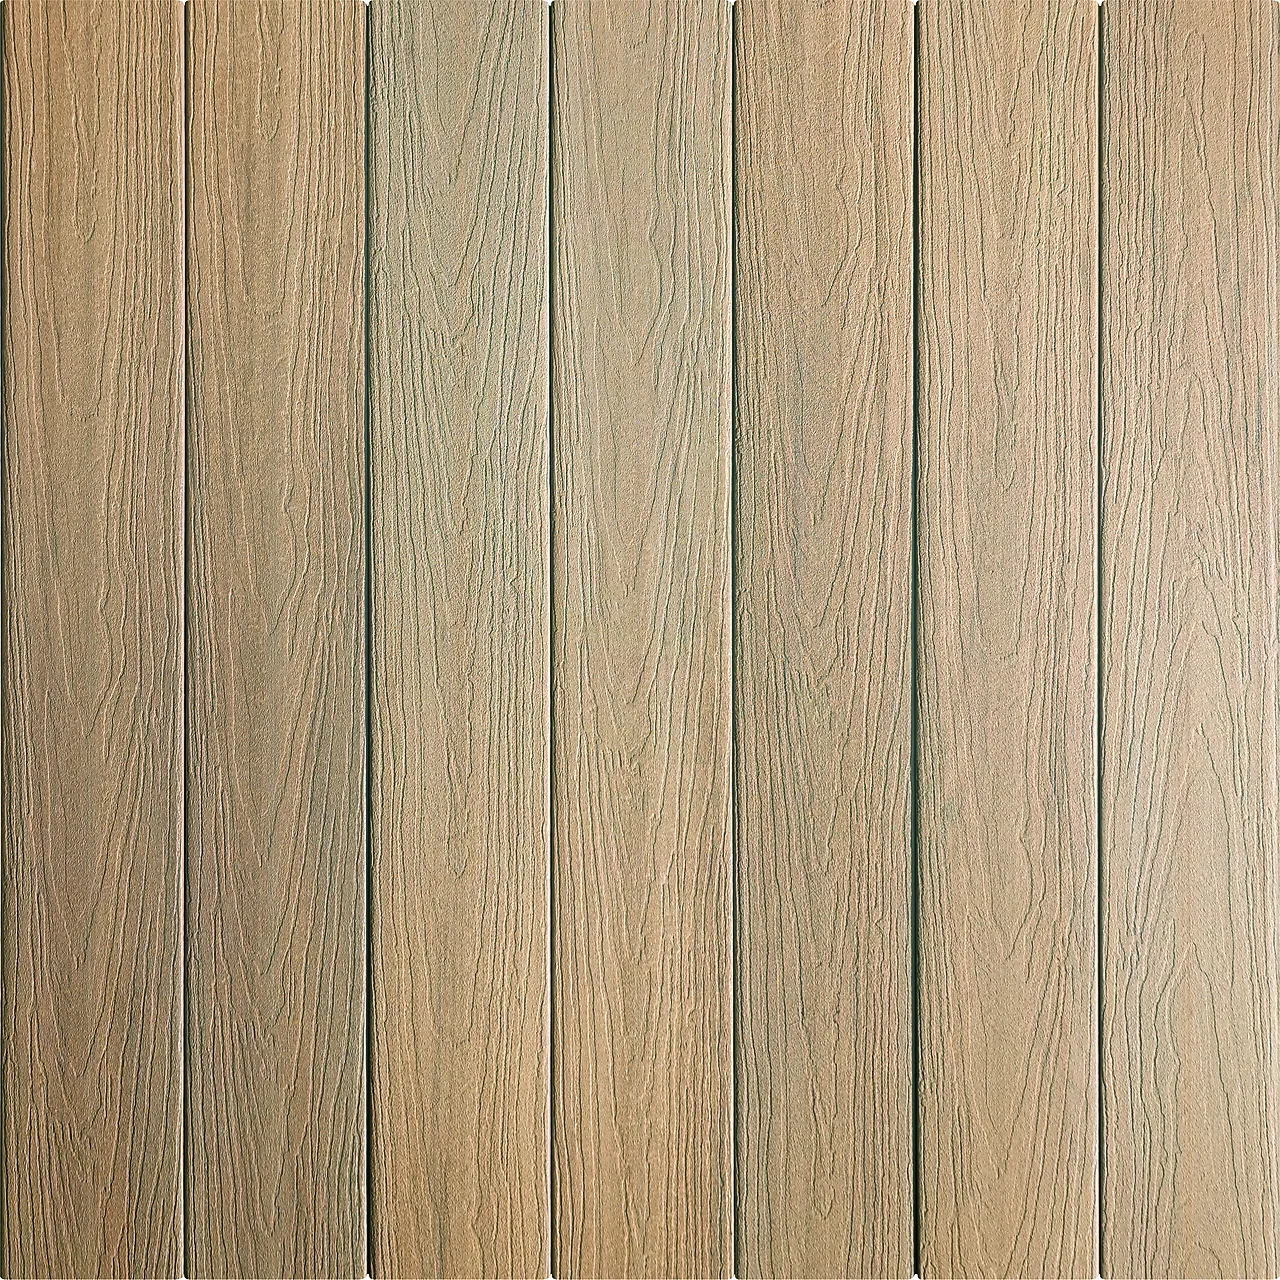 Kompositt terrassebord lys brun rettkant Prairie 24x137x4880 mm null - null - 3 - Miniatyr